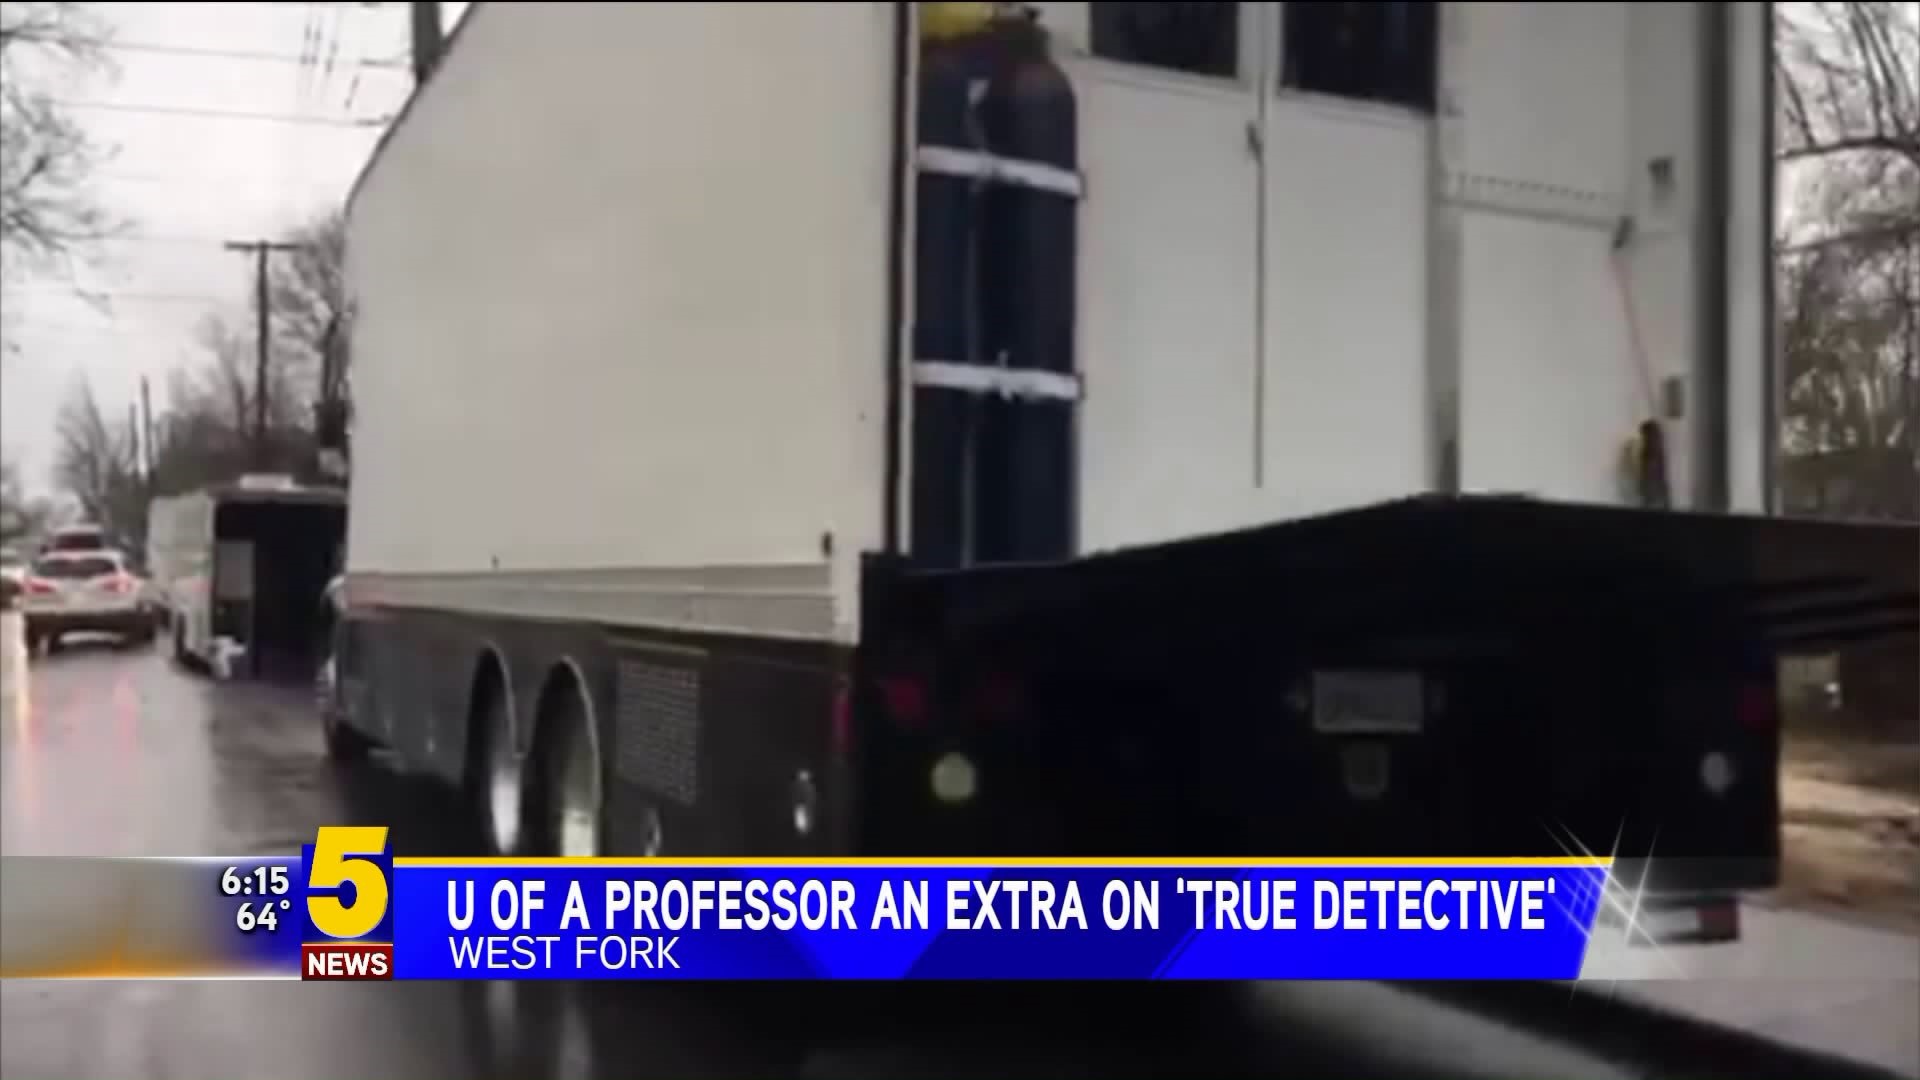 U Of A Professor An Extra On "True Detective"